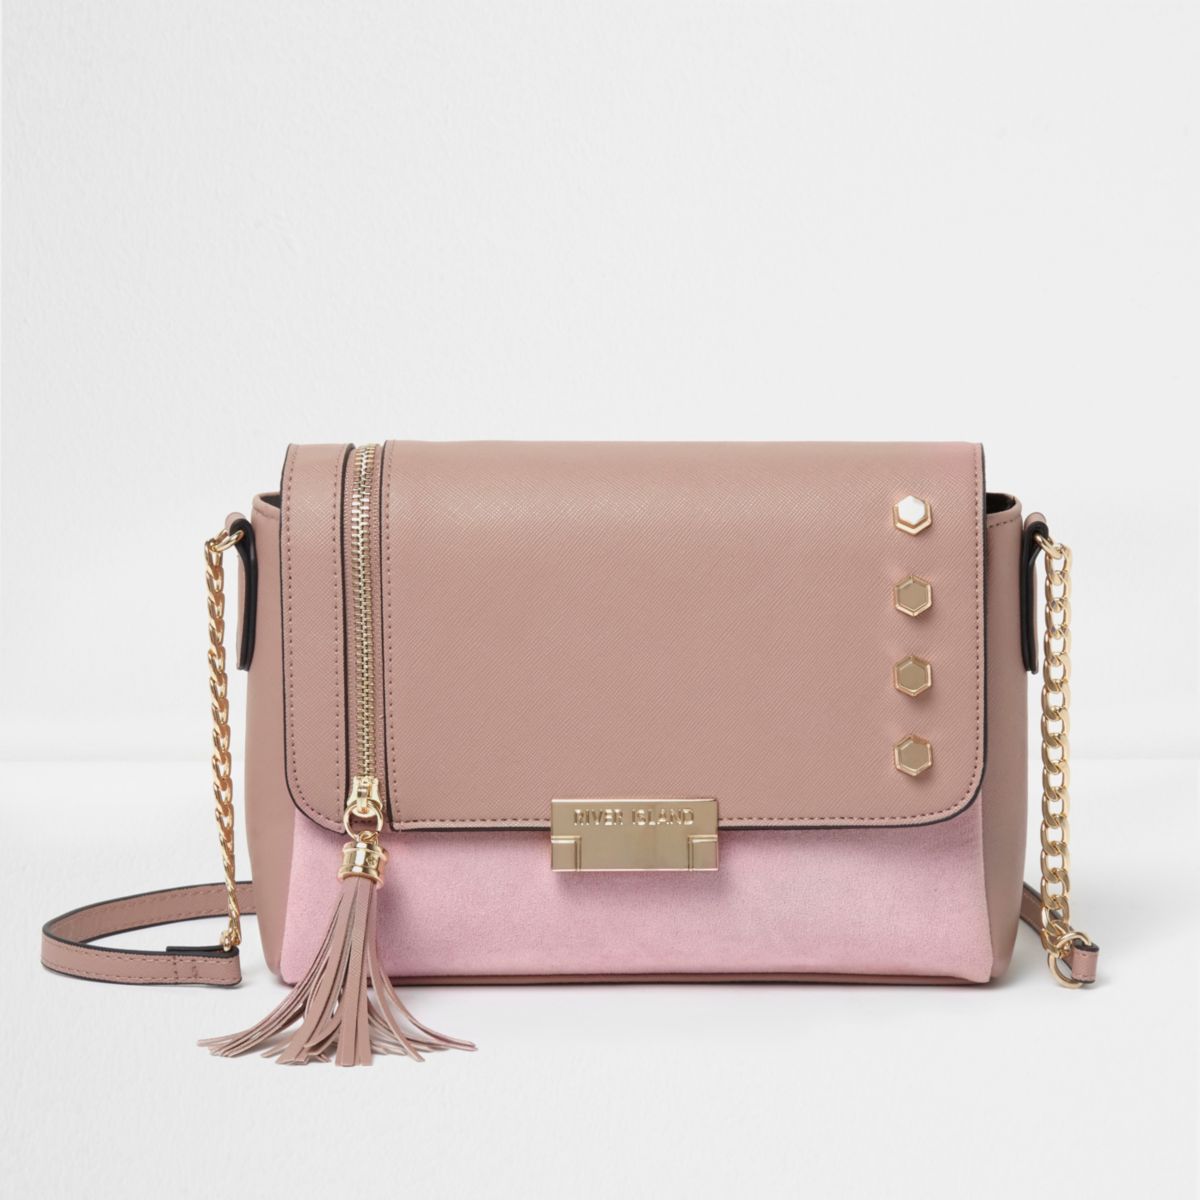 River Island Pink Handbag | Handbag Reviews 2018